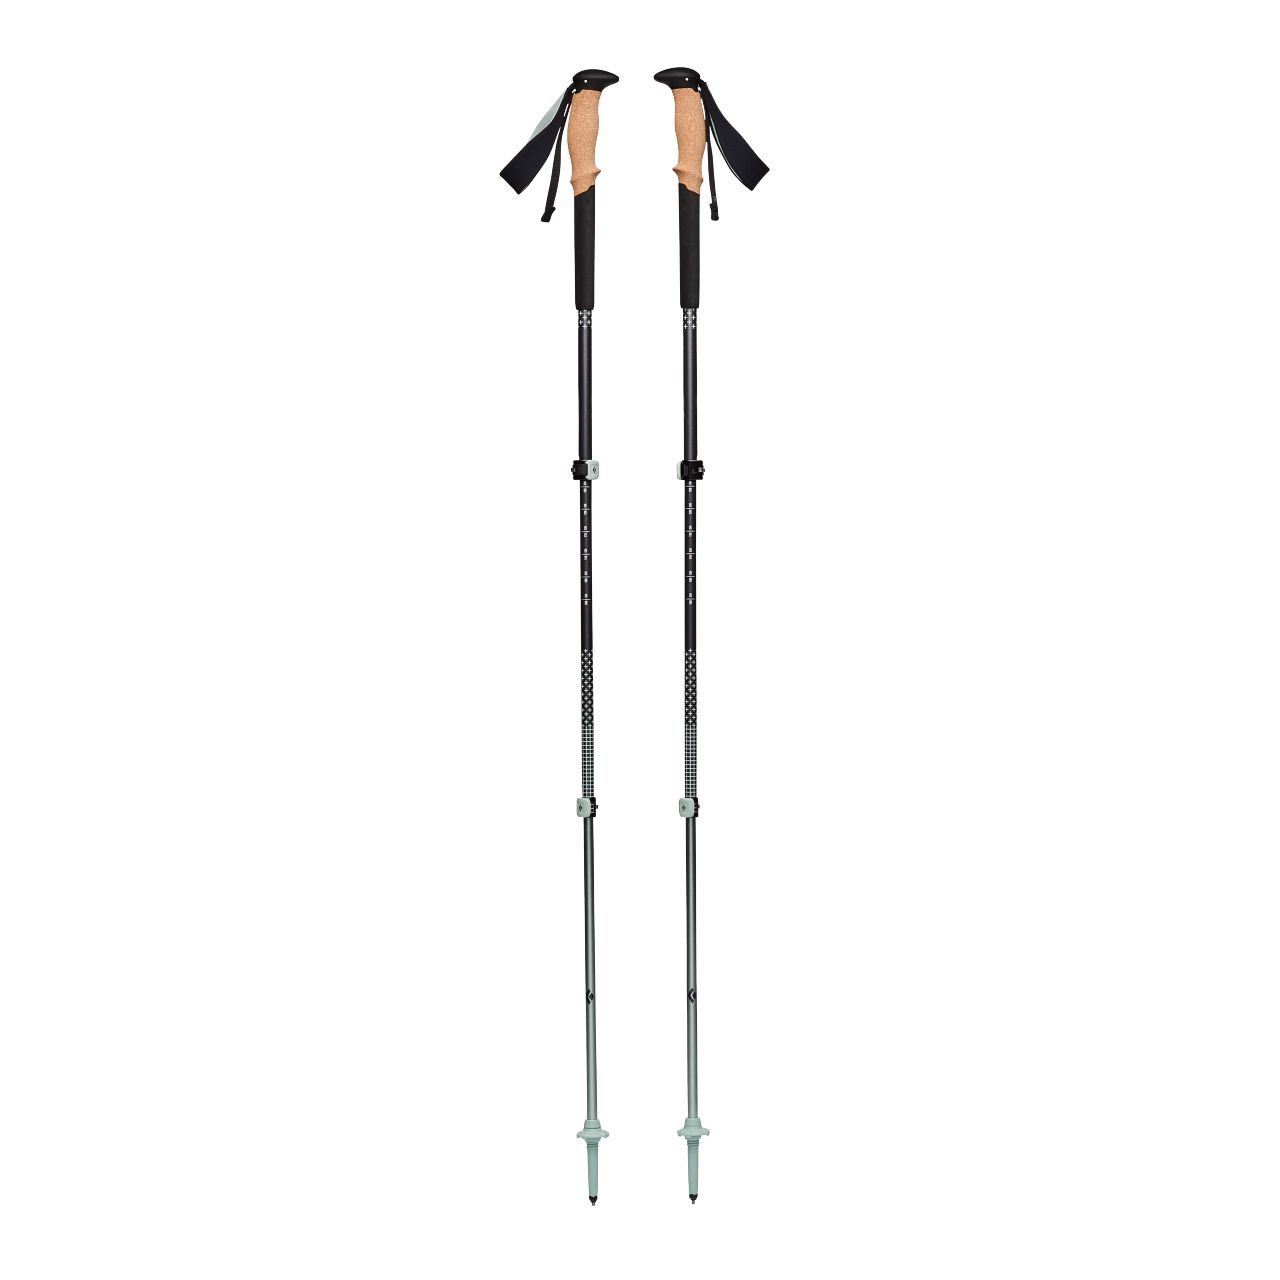 Pro | Adult Aluminum All-Season Snowshoe Trekking Poles - Black/Gray/Yellow